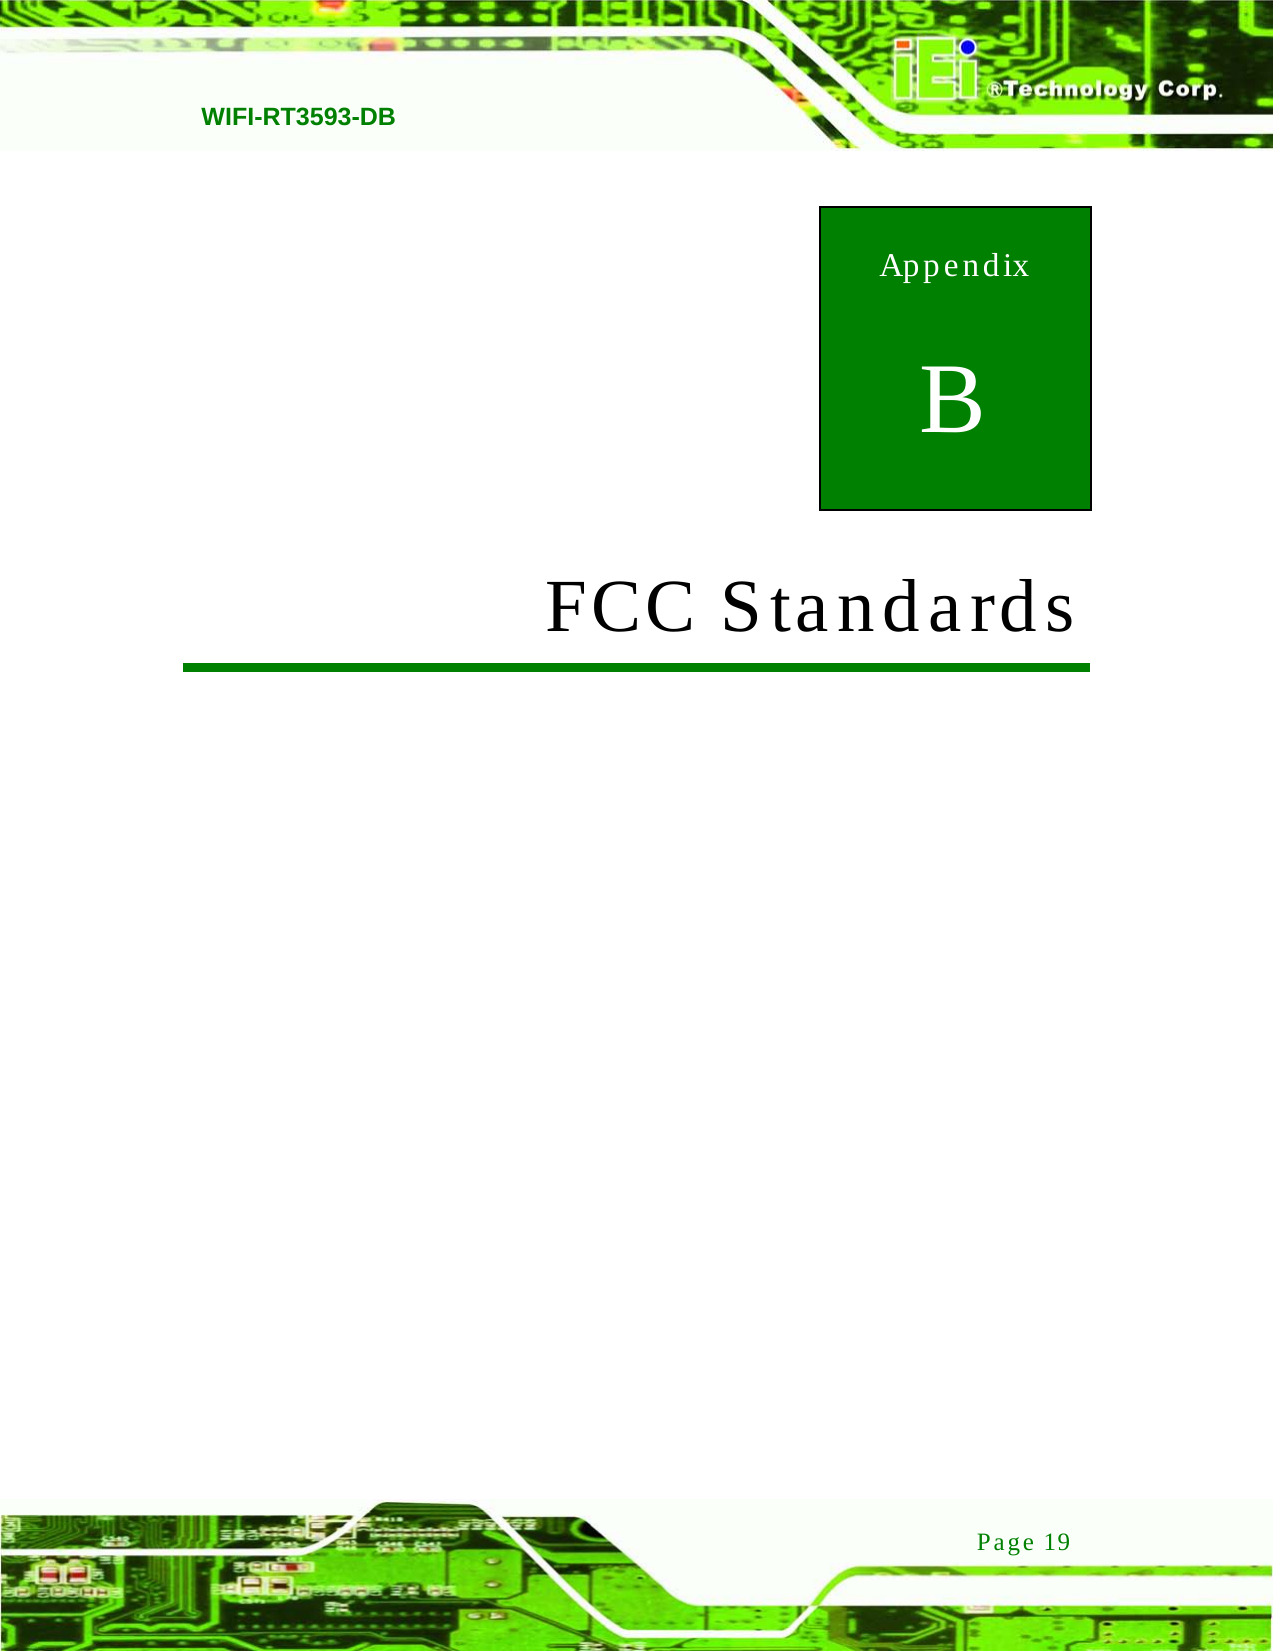   WIFI-RT3593-DB Page 19 Appendix B B FCC Standards   